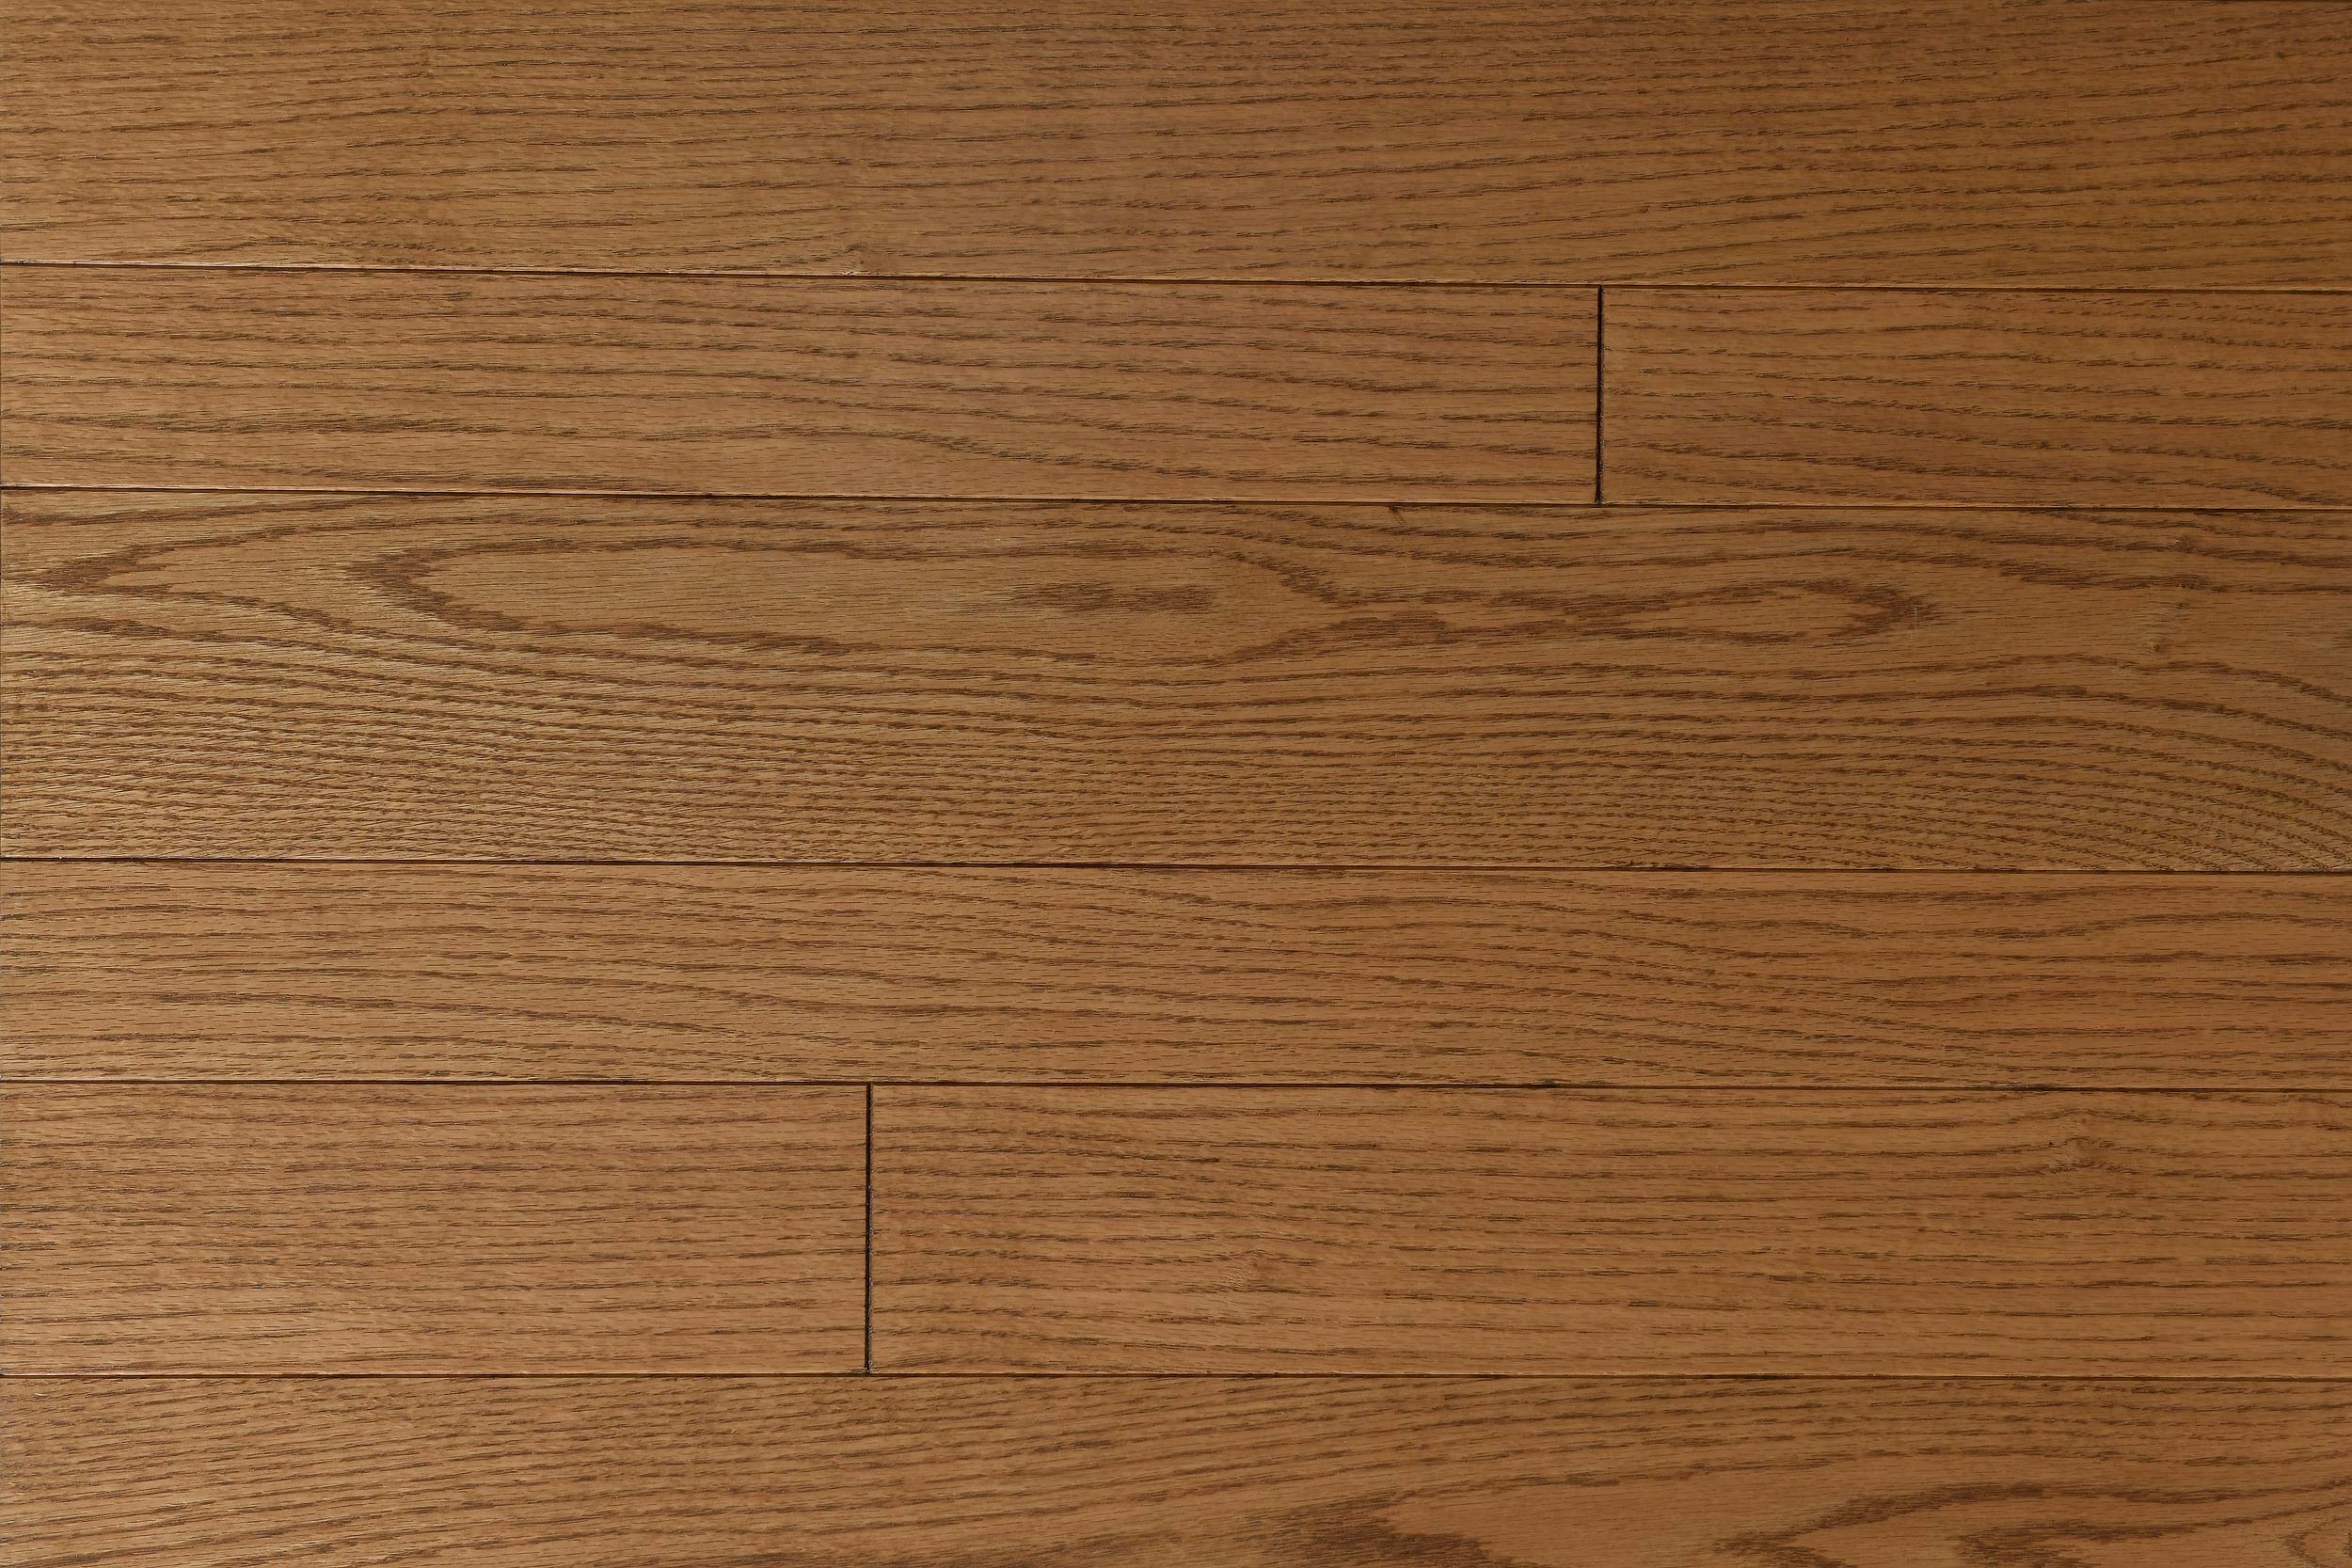 Early American On Red Oak Custom Hardwood Flooring By Mhp Flooring